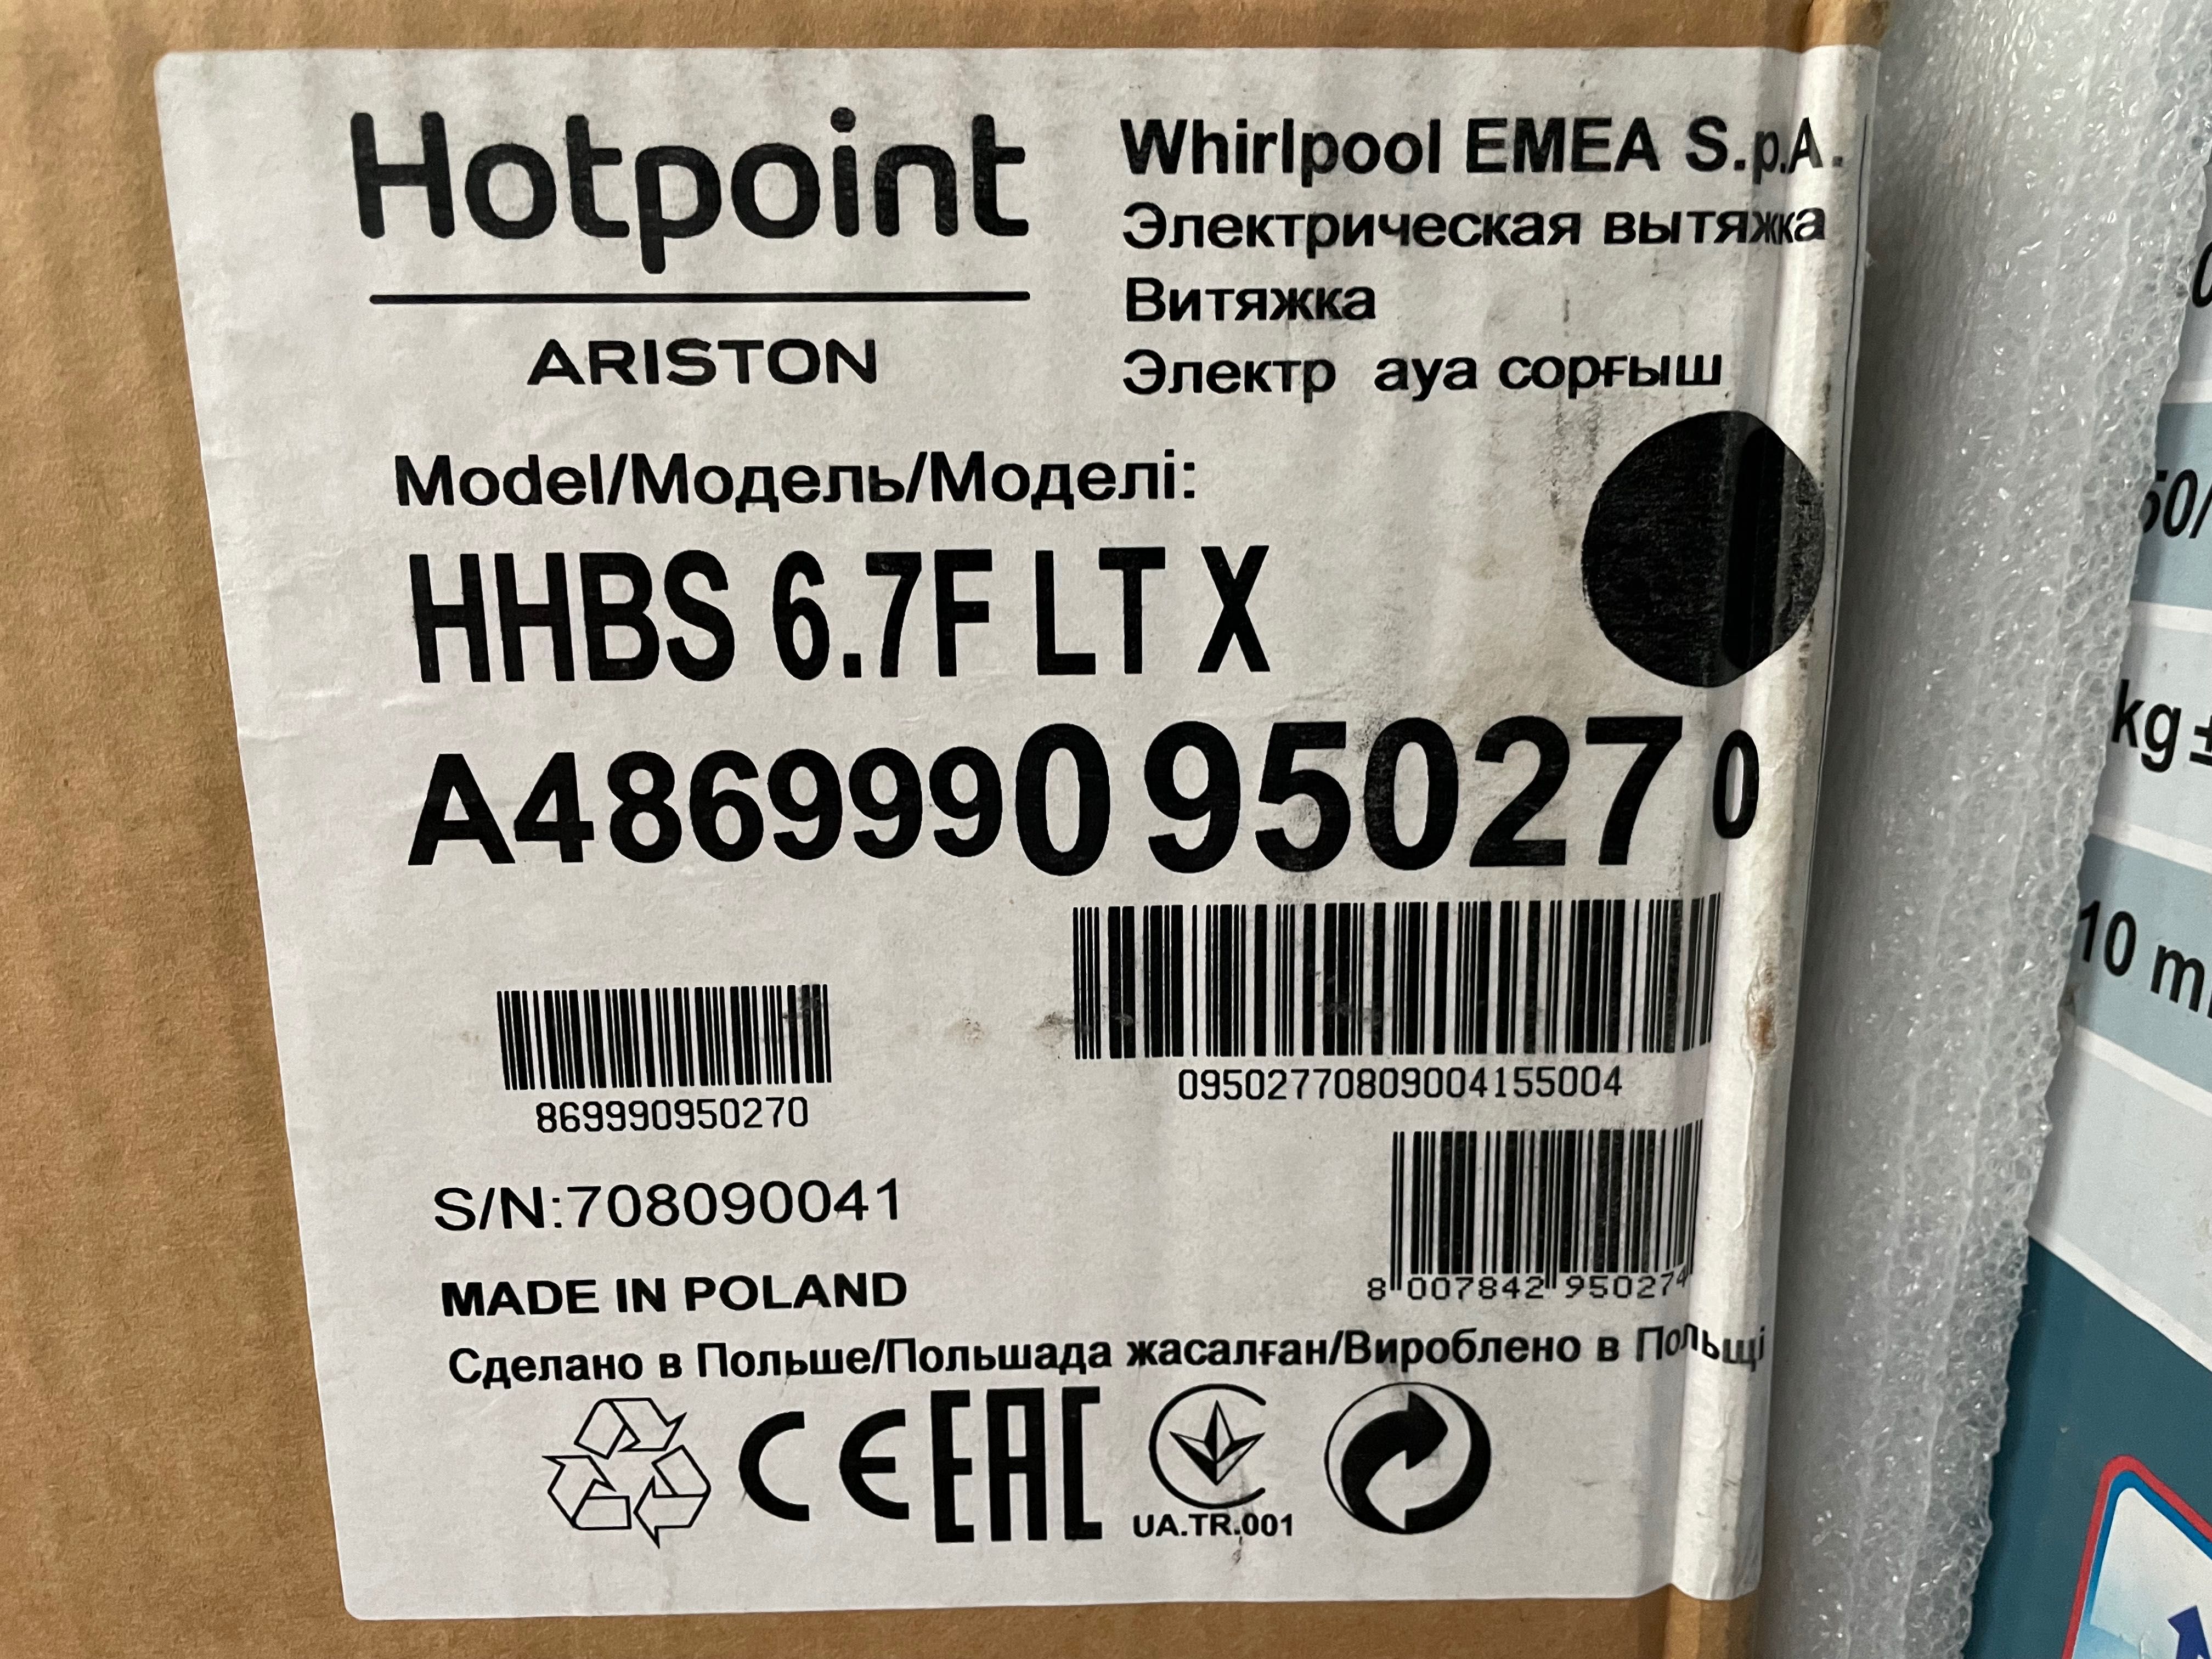 Hotpoint-Ariston HHBS 6.7F LT X